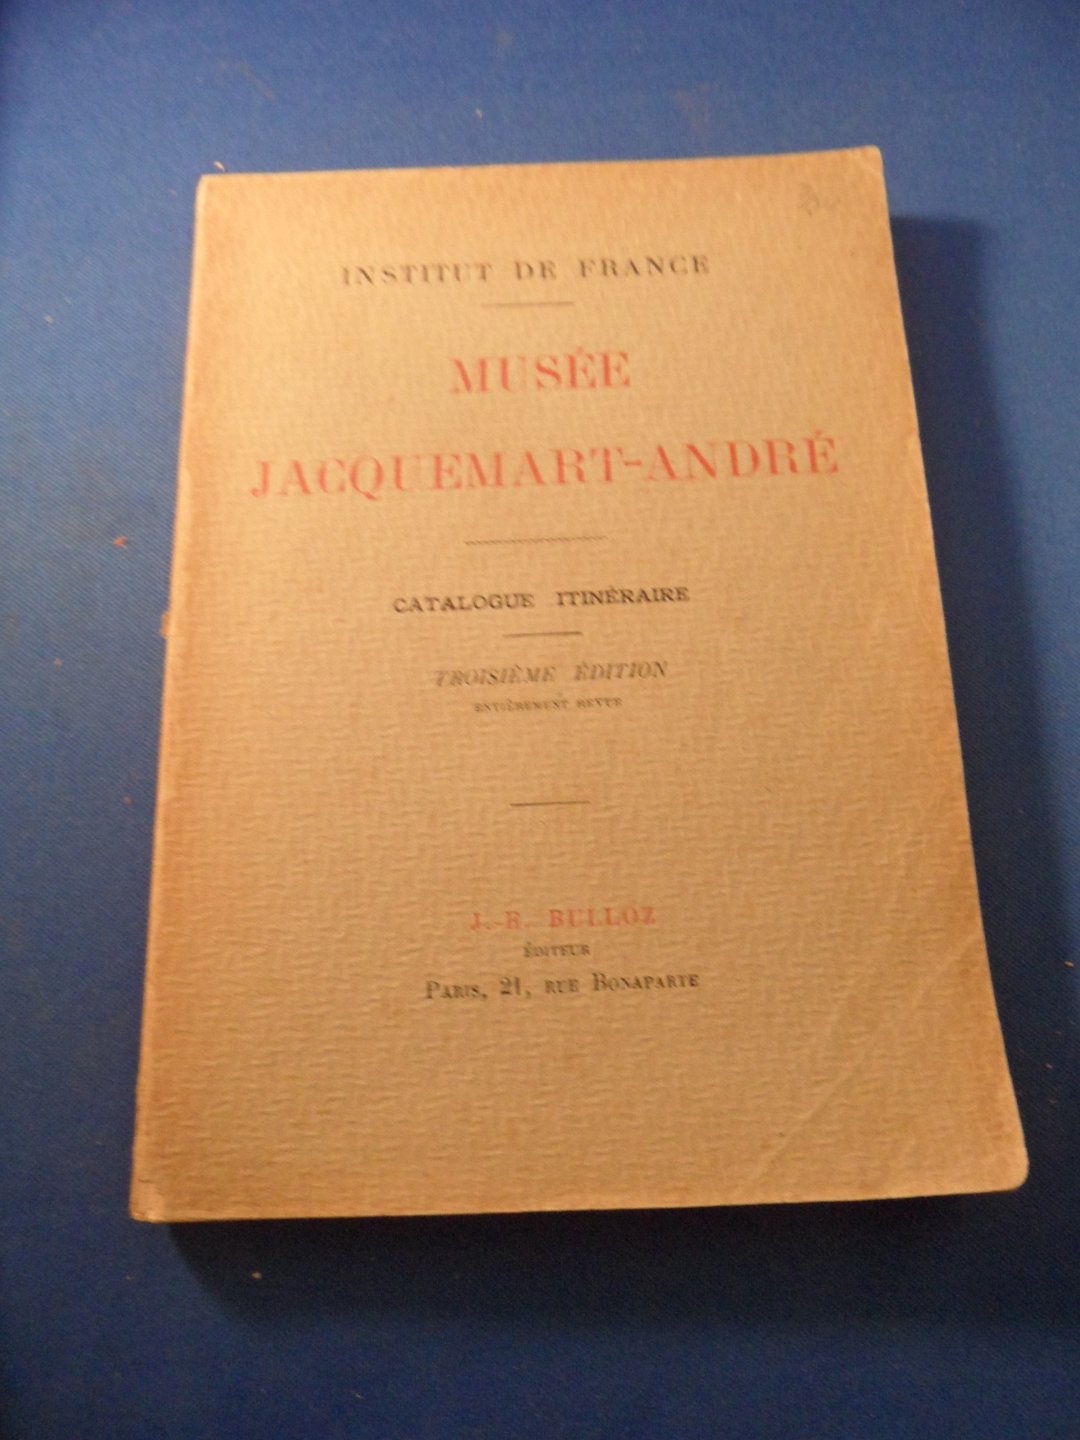 Bulloz, J.-B. (Ed.) - Catalogue Itinéraire, musee Jacquemart-Andre